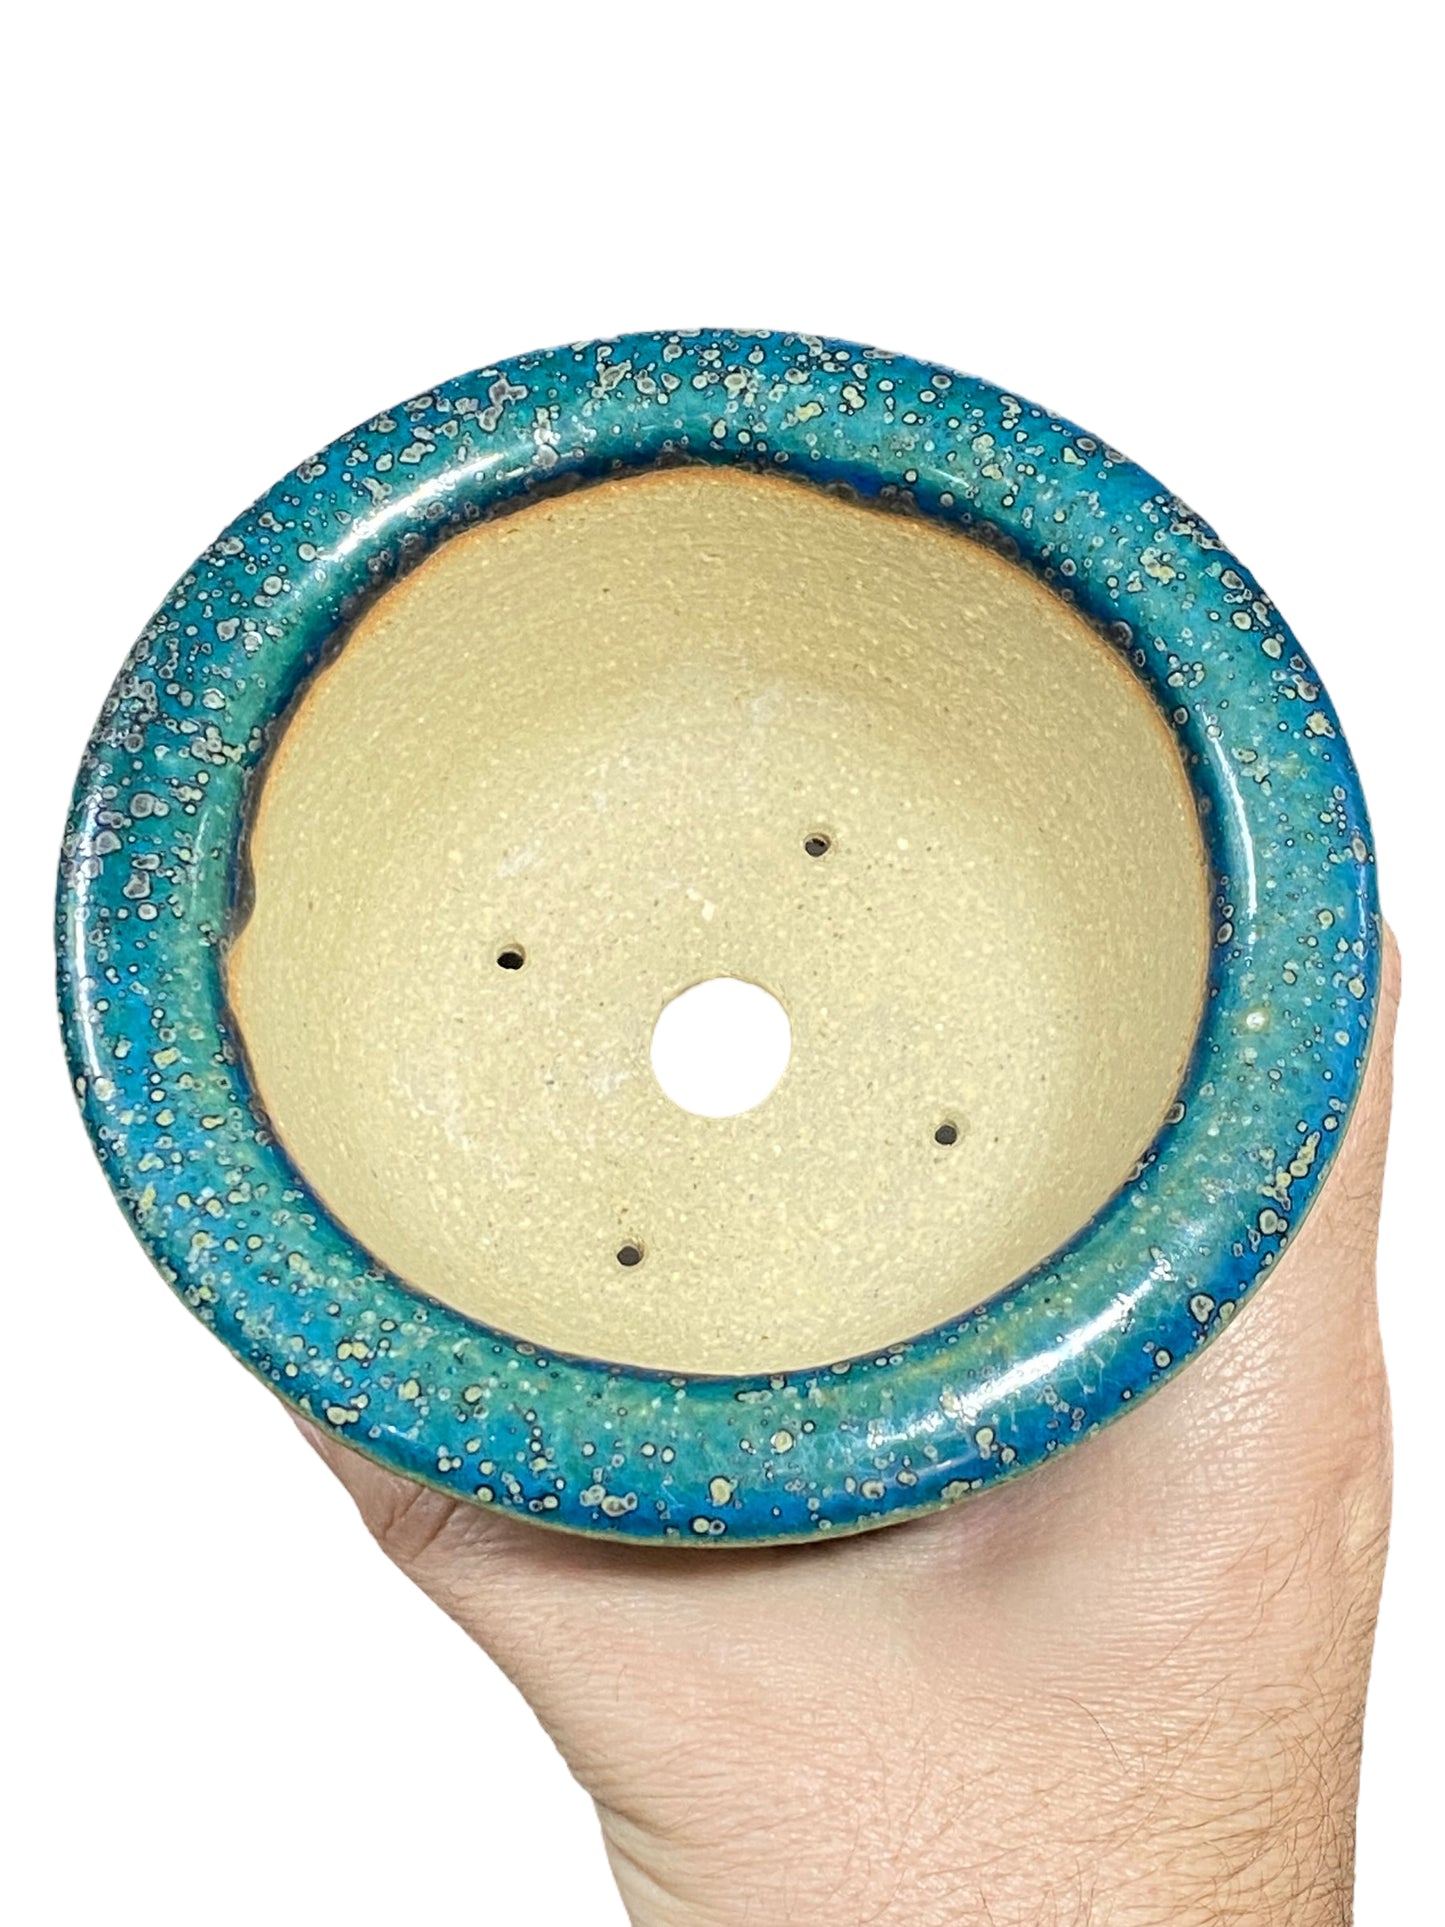 Koyo - Classic Oribe Glazed Banded Bowl Bonsai Pot